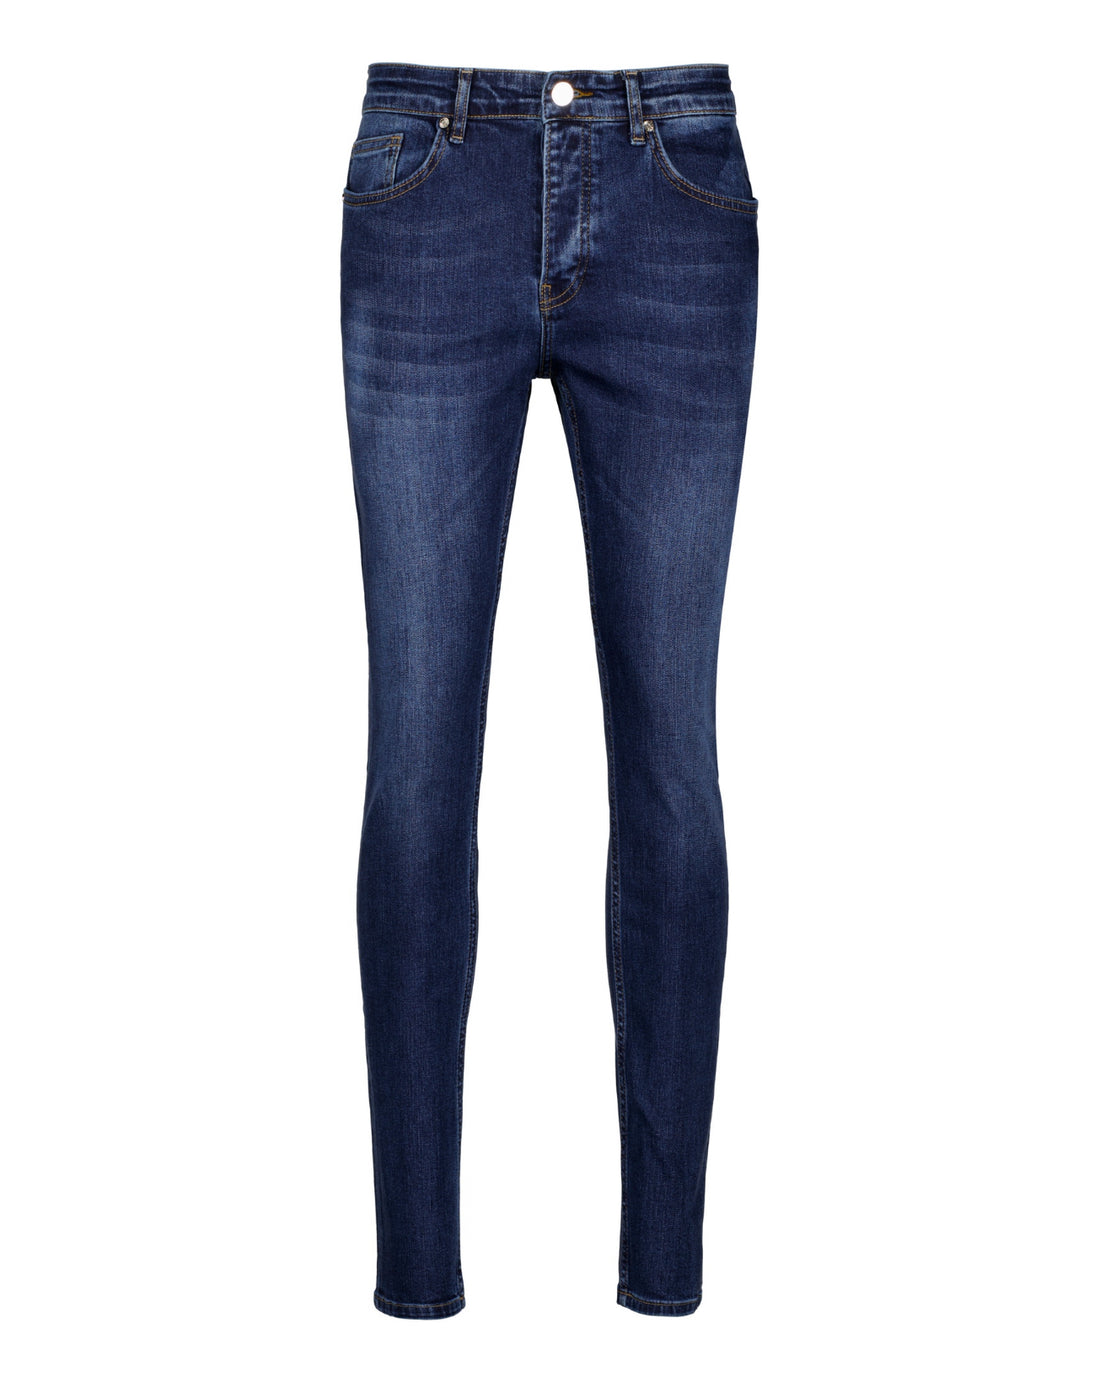 The Fernan Blue Classic Jeans - Jeans by Urbbana